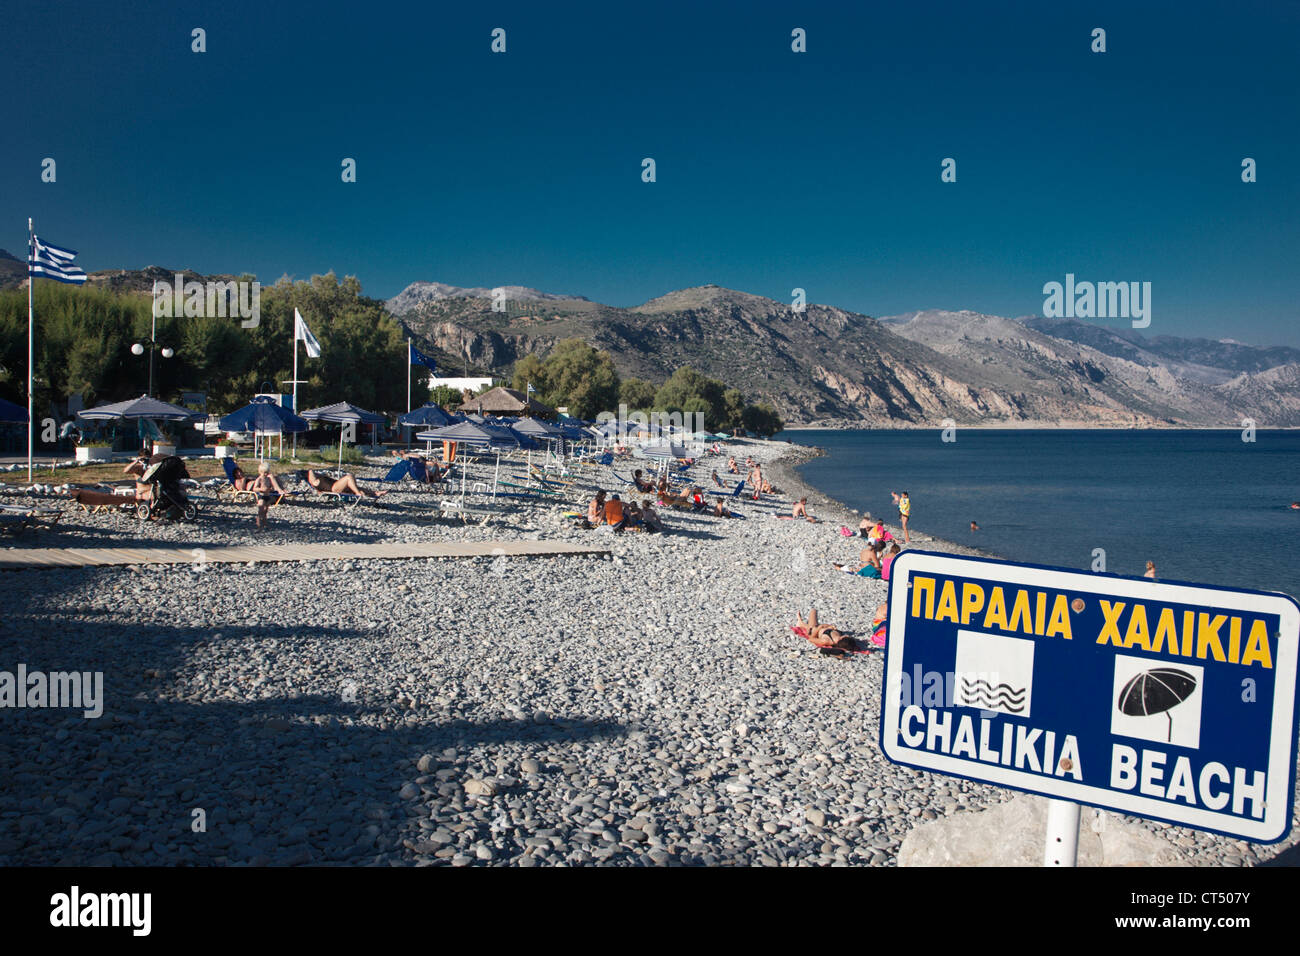 General view of Chalikia Beach, Paleochora, South Crete, Greece Stock Photo